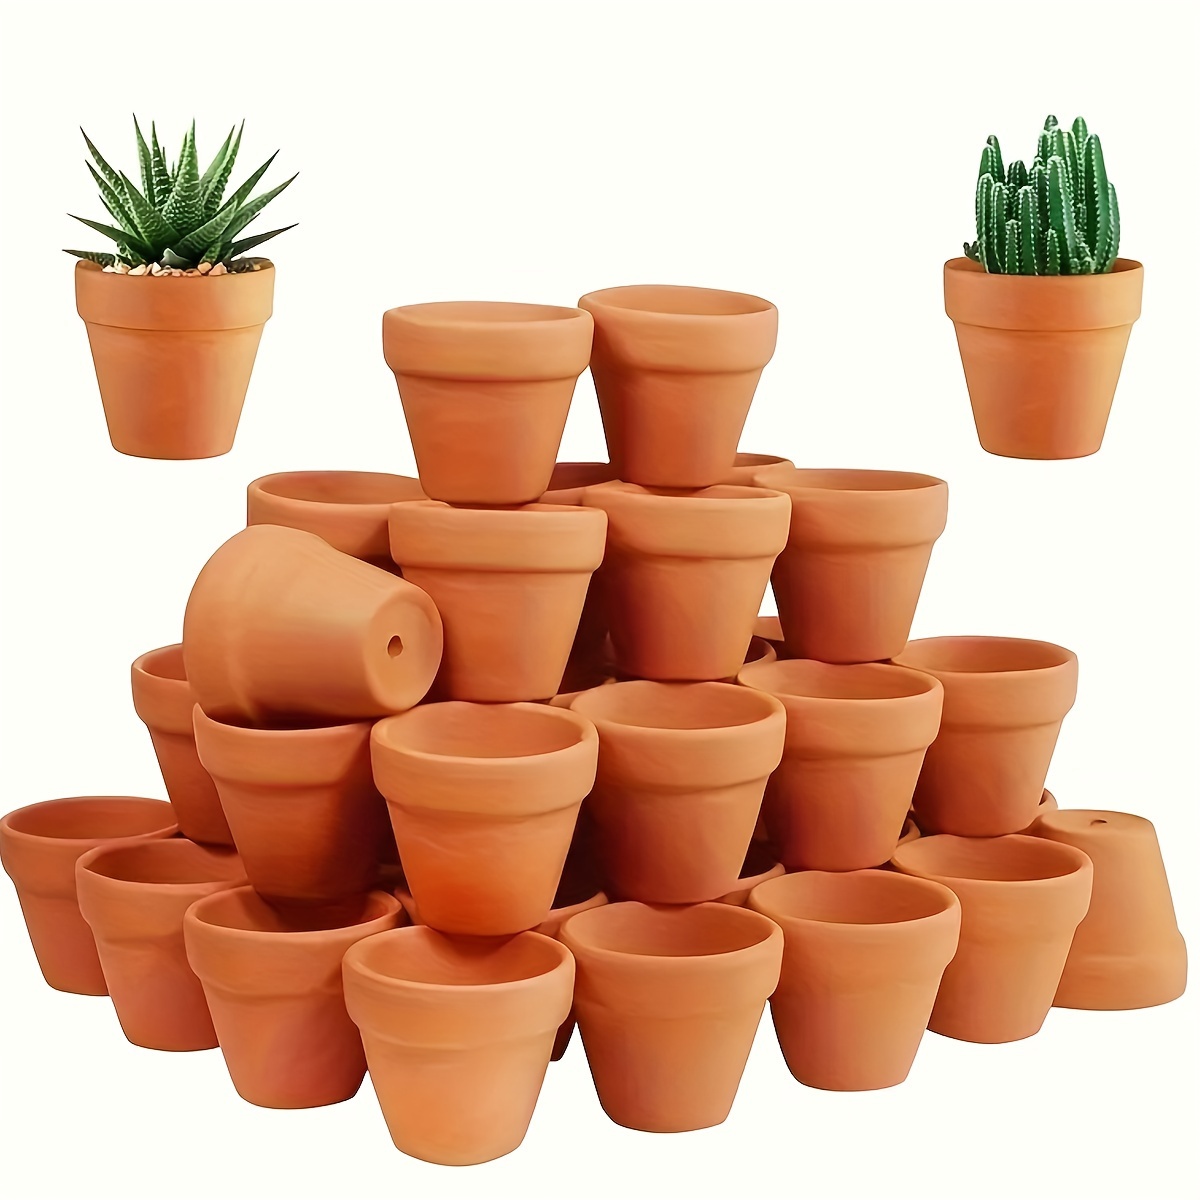 

Set Of 10 Premium Red Ceramic Planters - Lightweight, Versatile For Indoor/outdoor Use